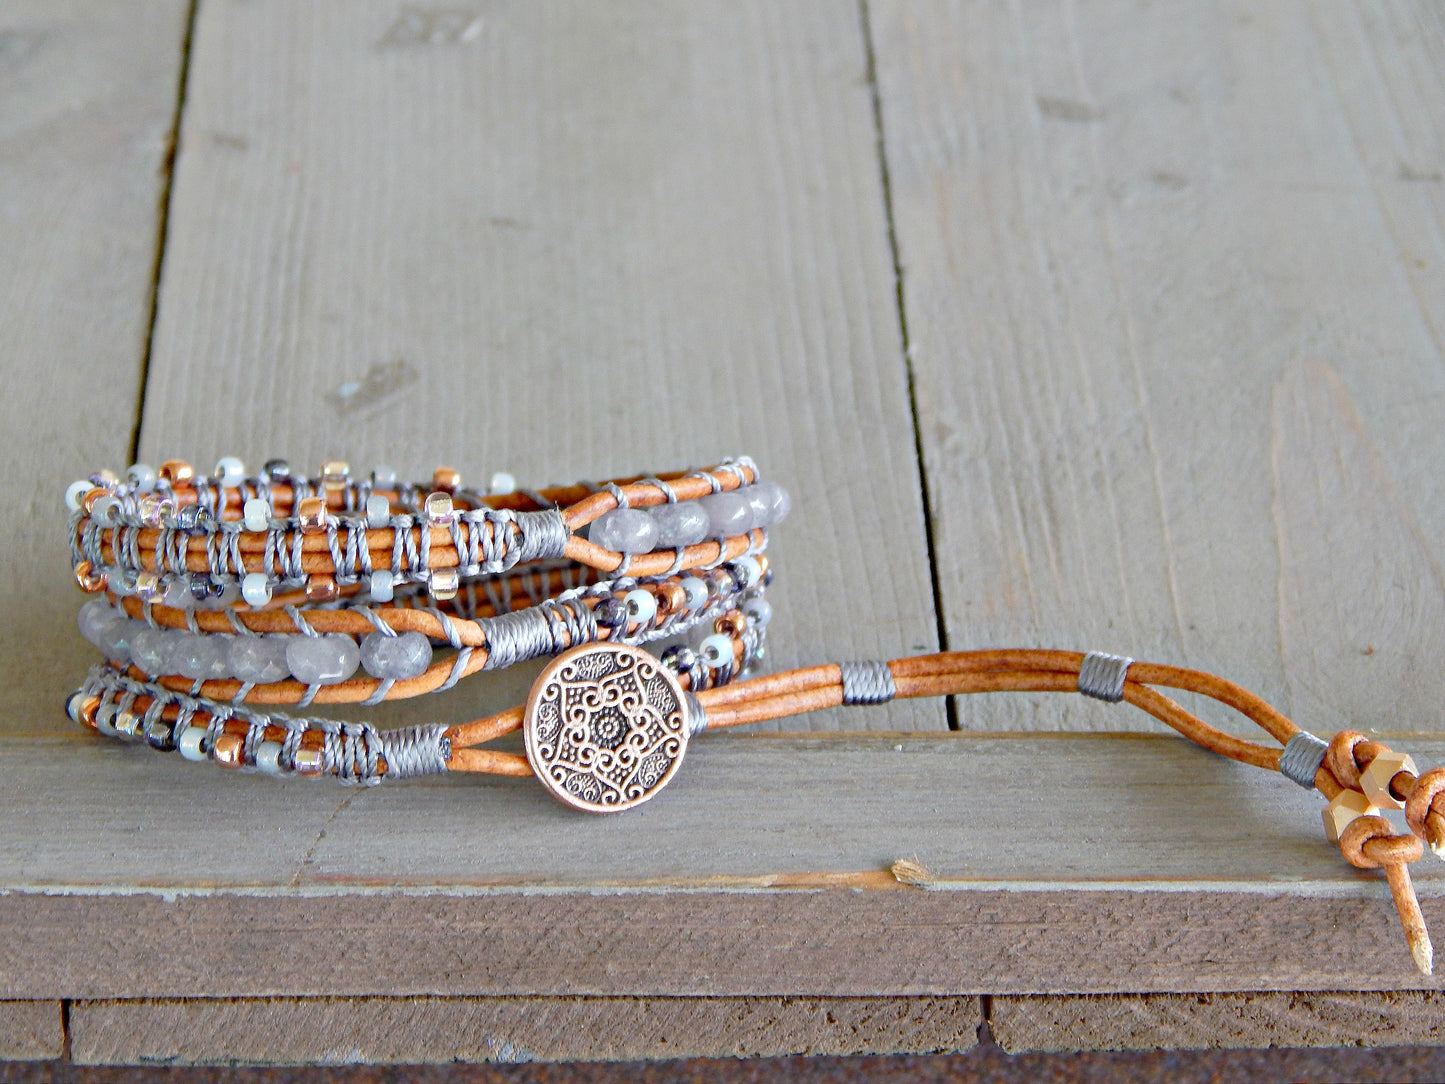 Copper Navy Blush Gray Agate and Beaded Macrame 3x wrap bracelet